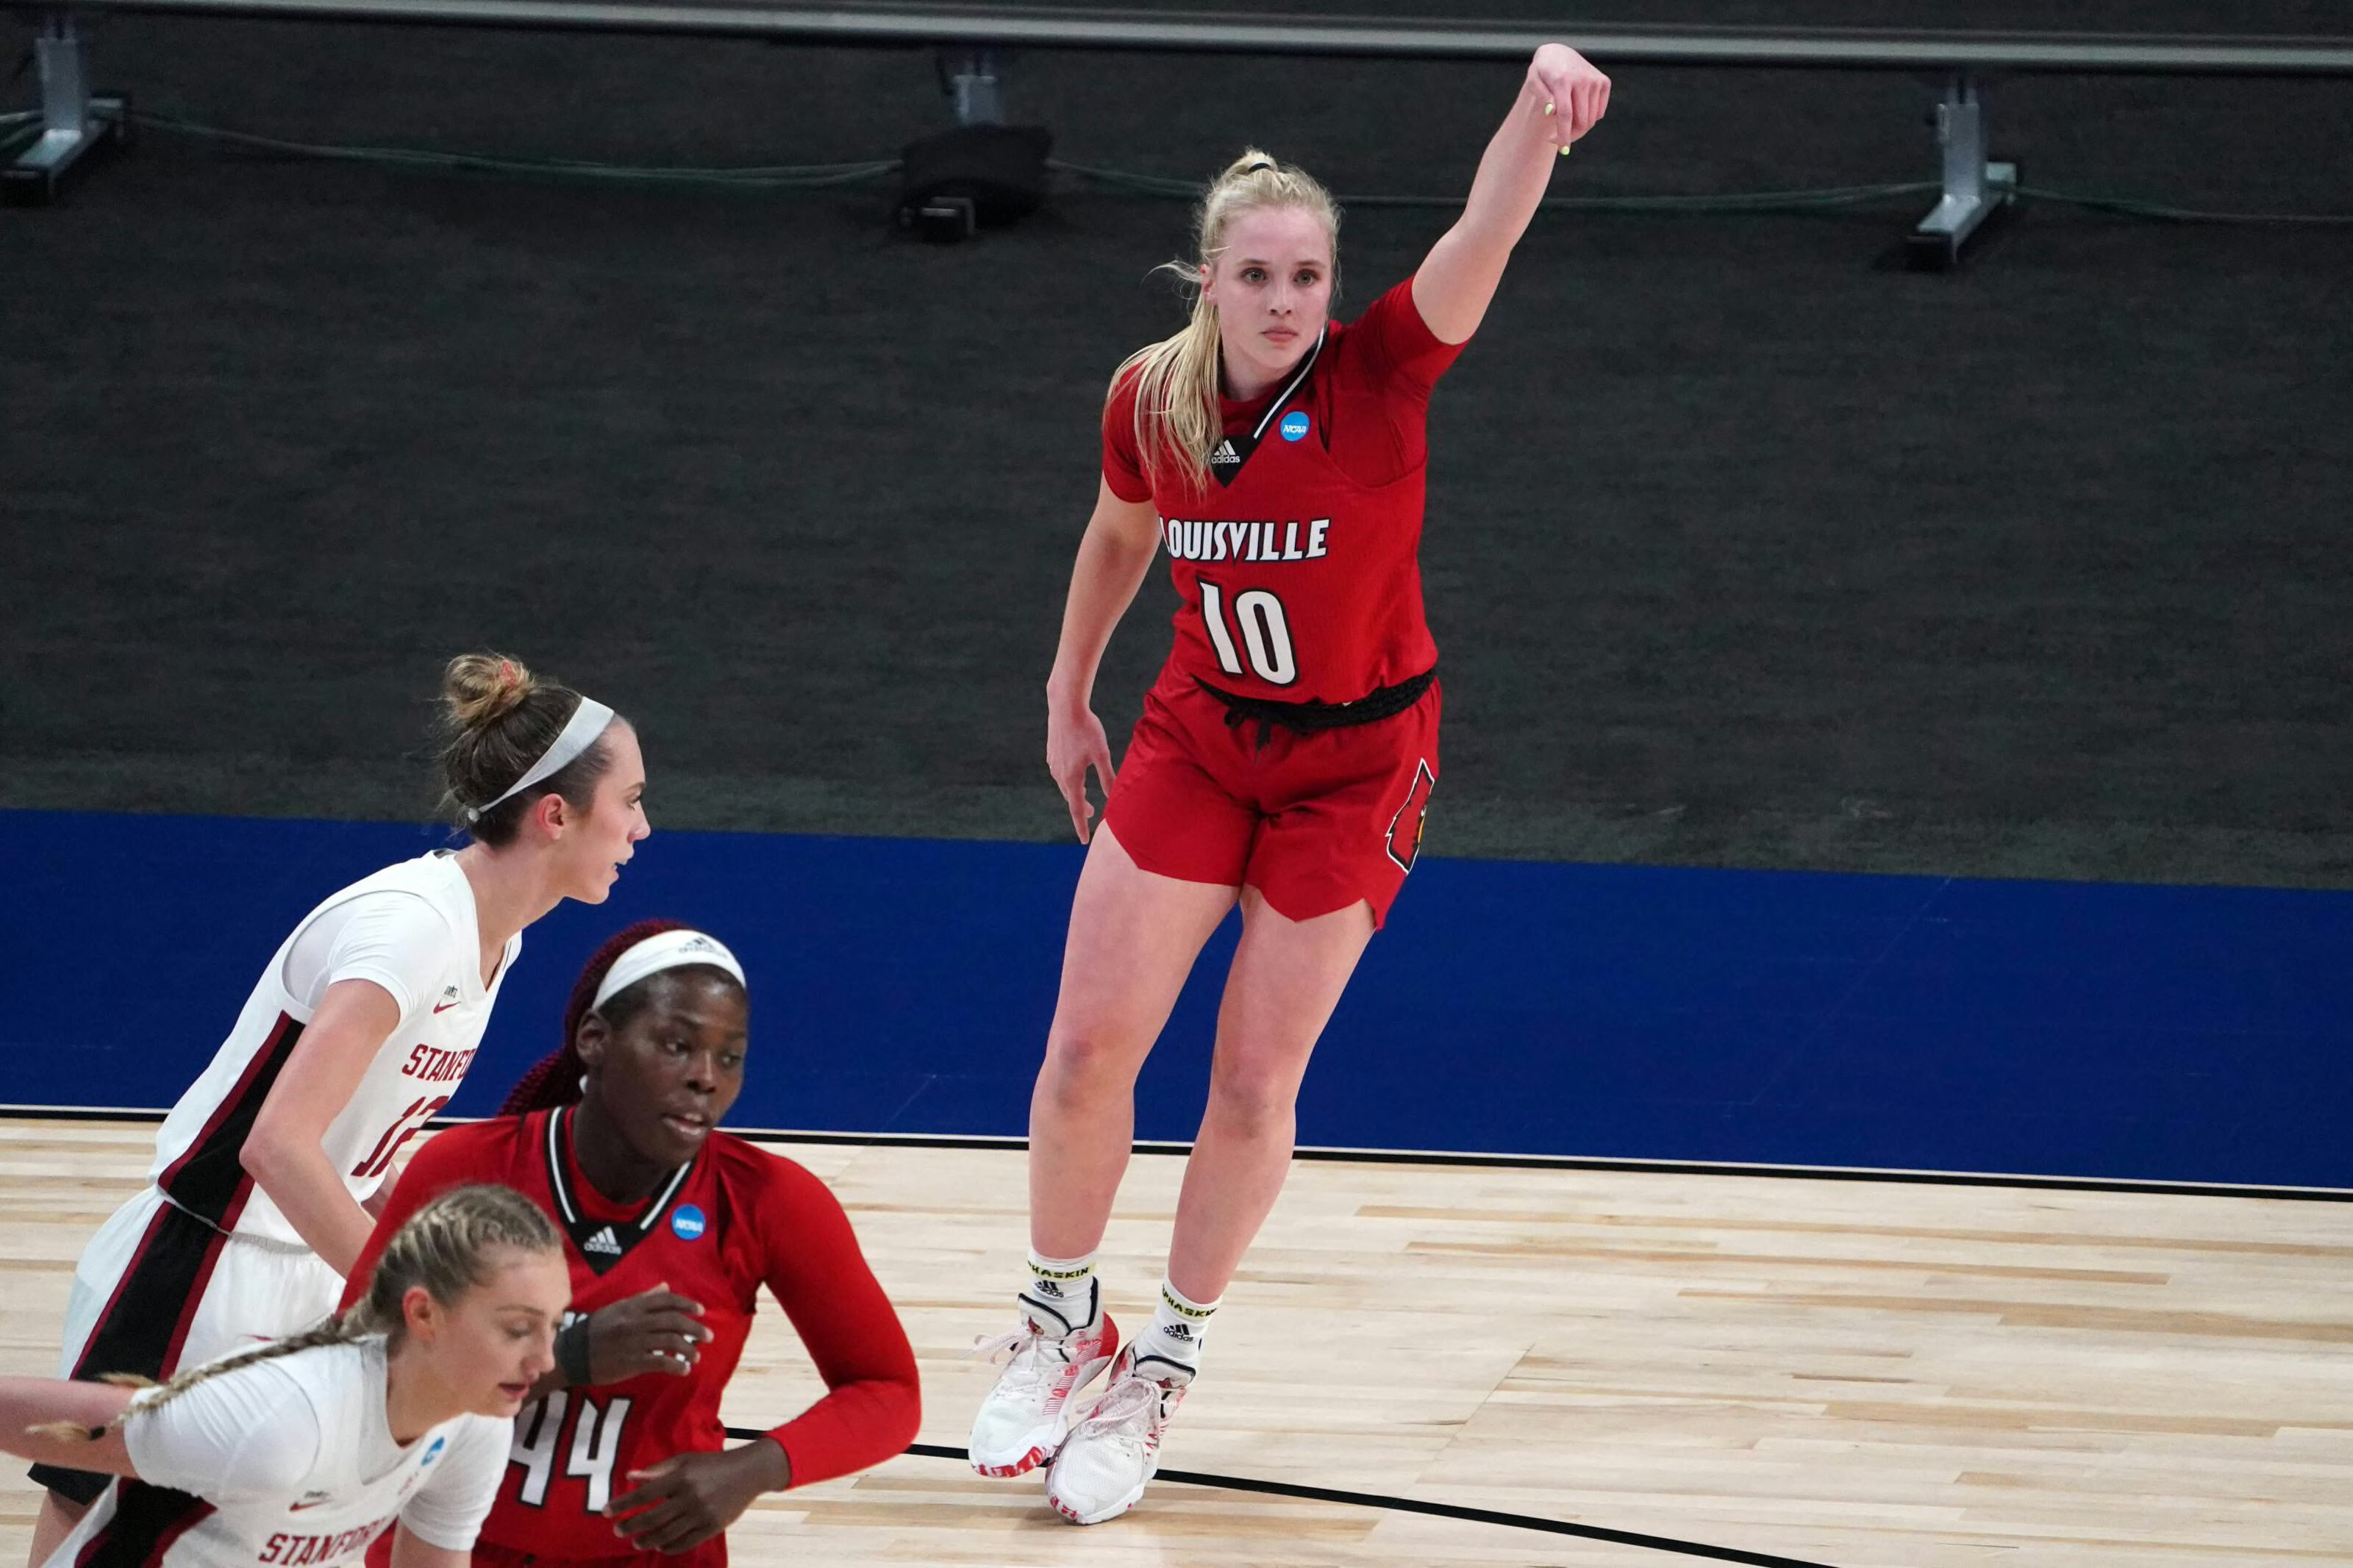 Louisville Cardinals adidas Practice Jersey - Basketball Women's New